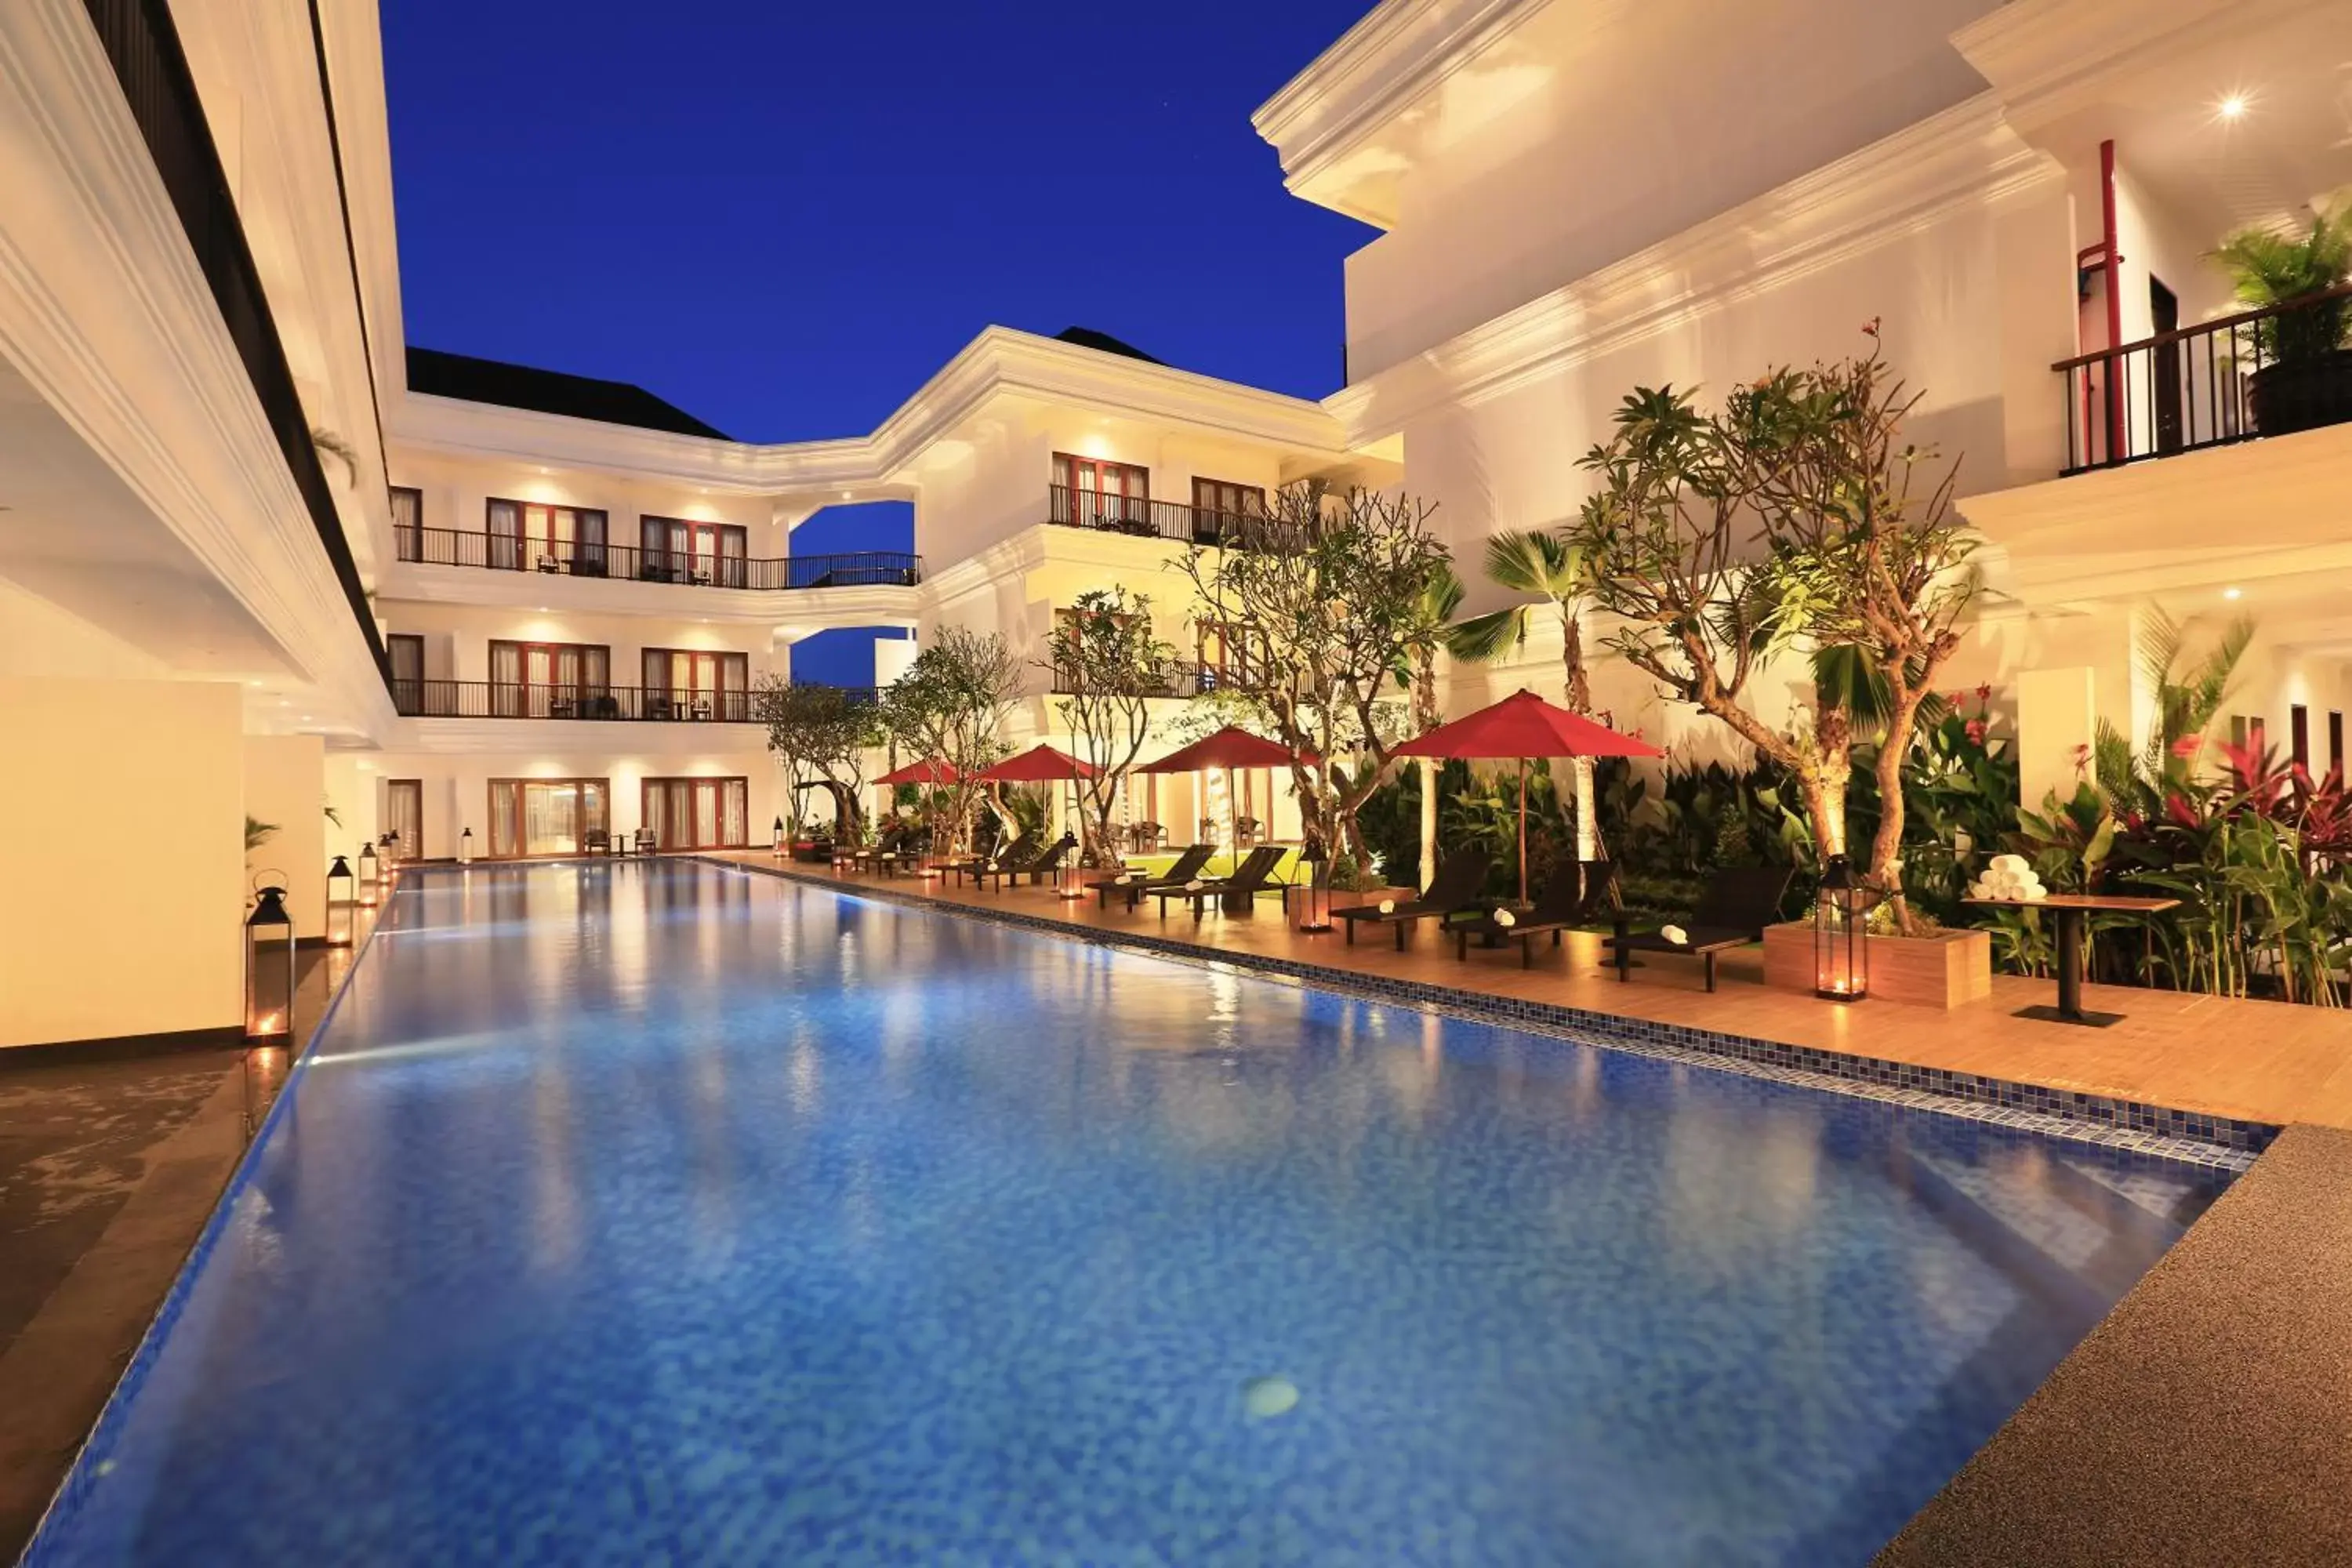 Swimming Pool in Grand Palace Hotel Sanur - Bali